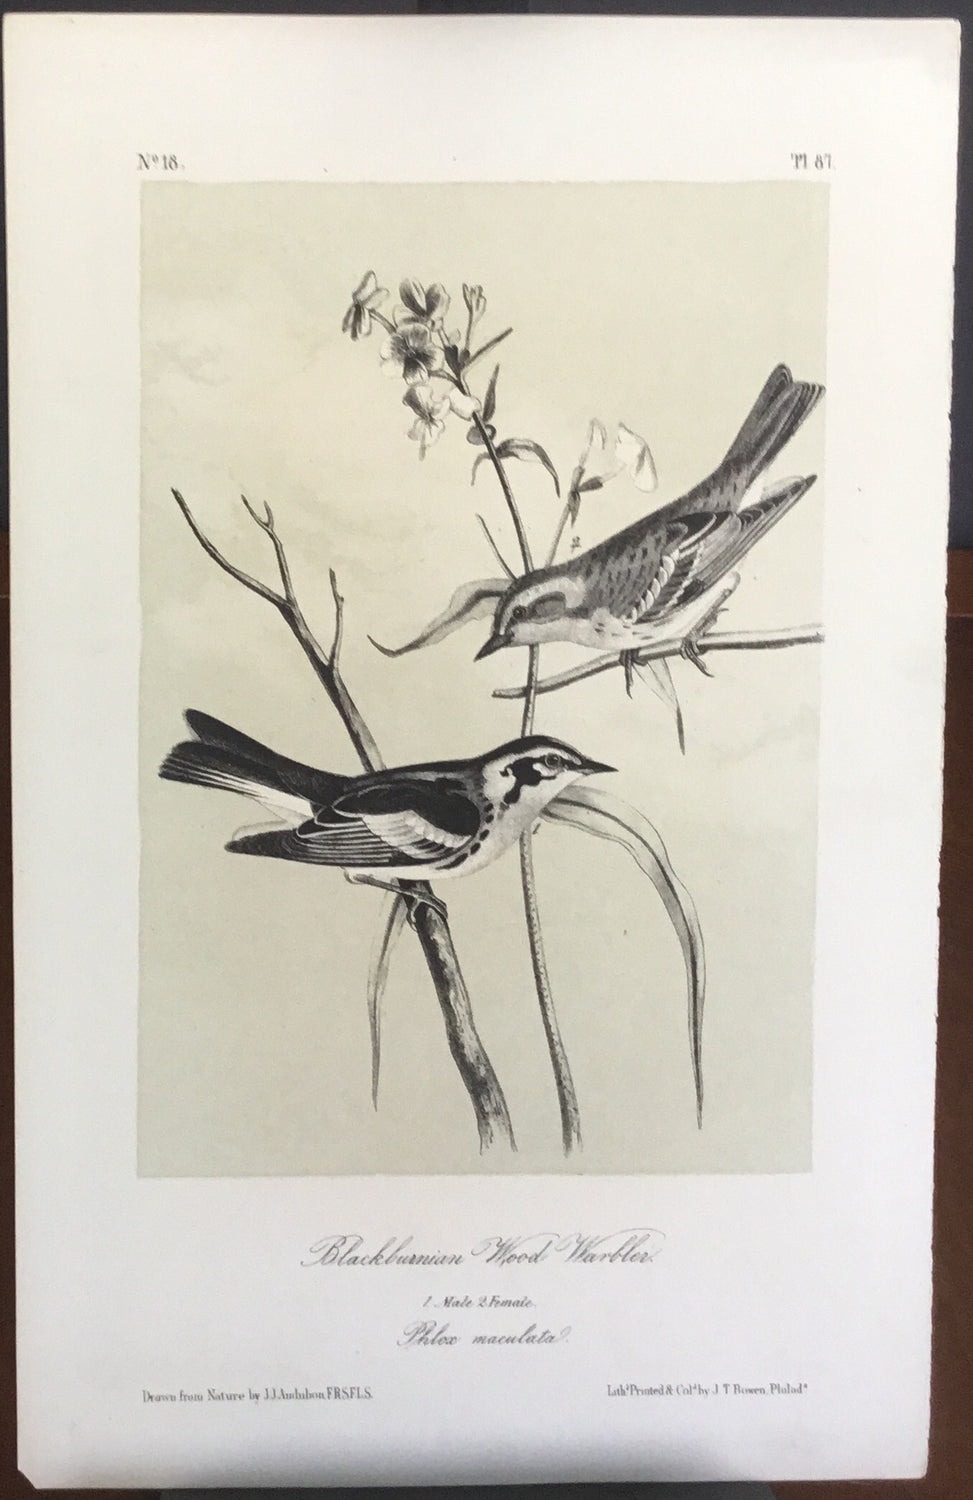 Audubon Octavo Blackburnian Wood Warbler, plate 81, uncolored test sheet, 7 x 11